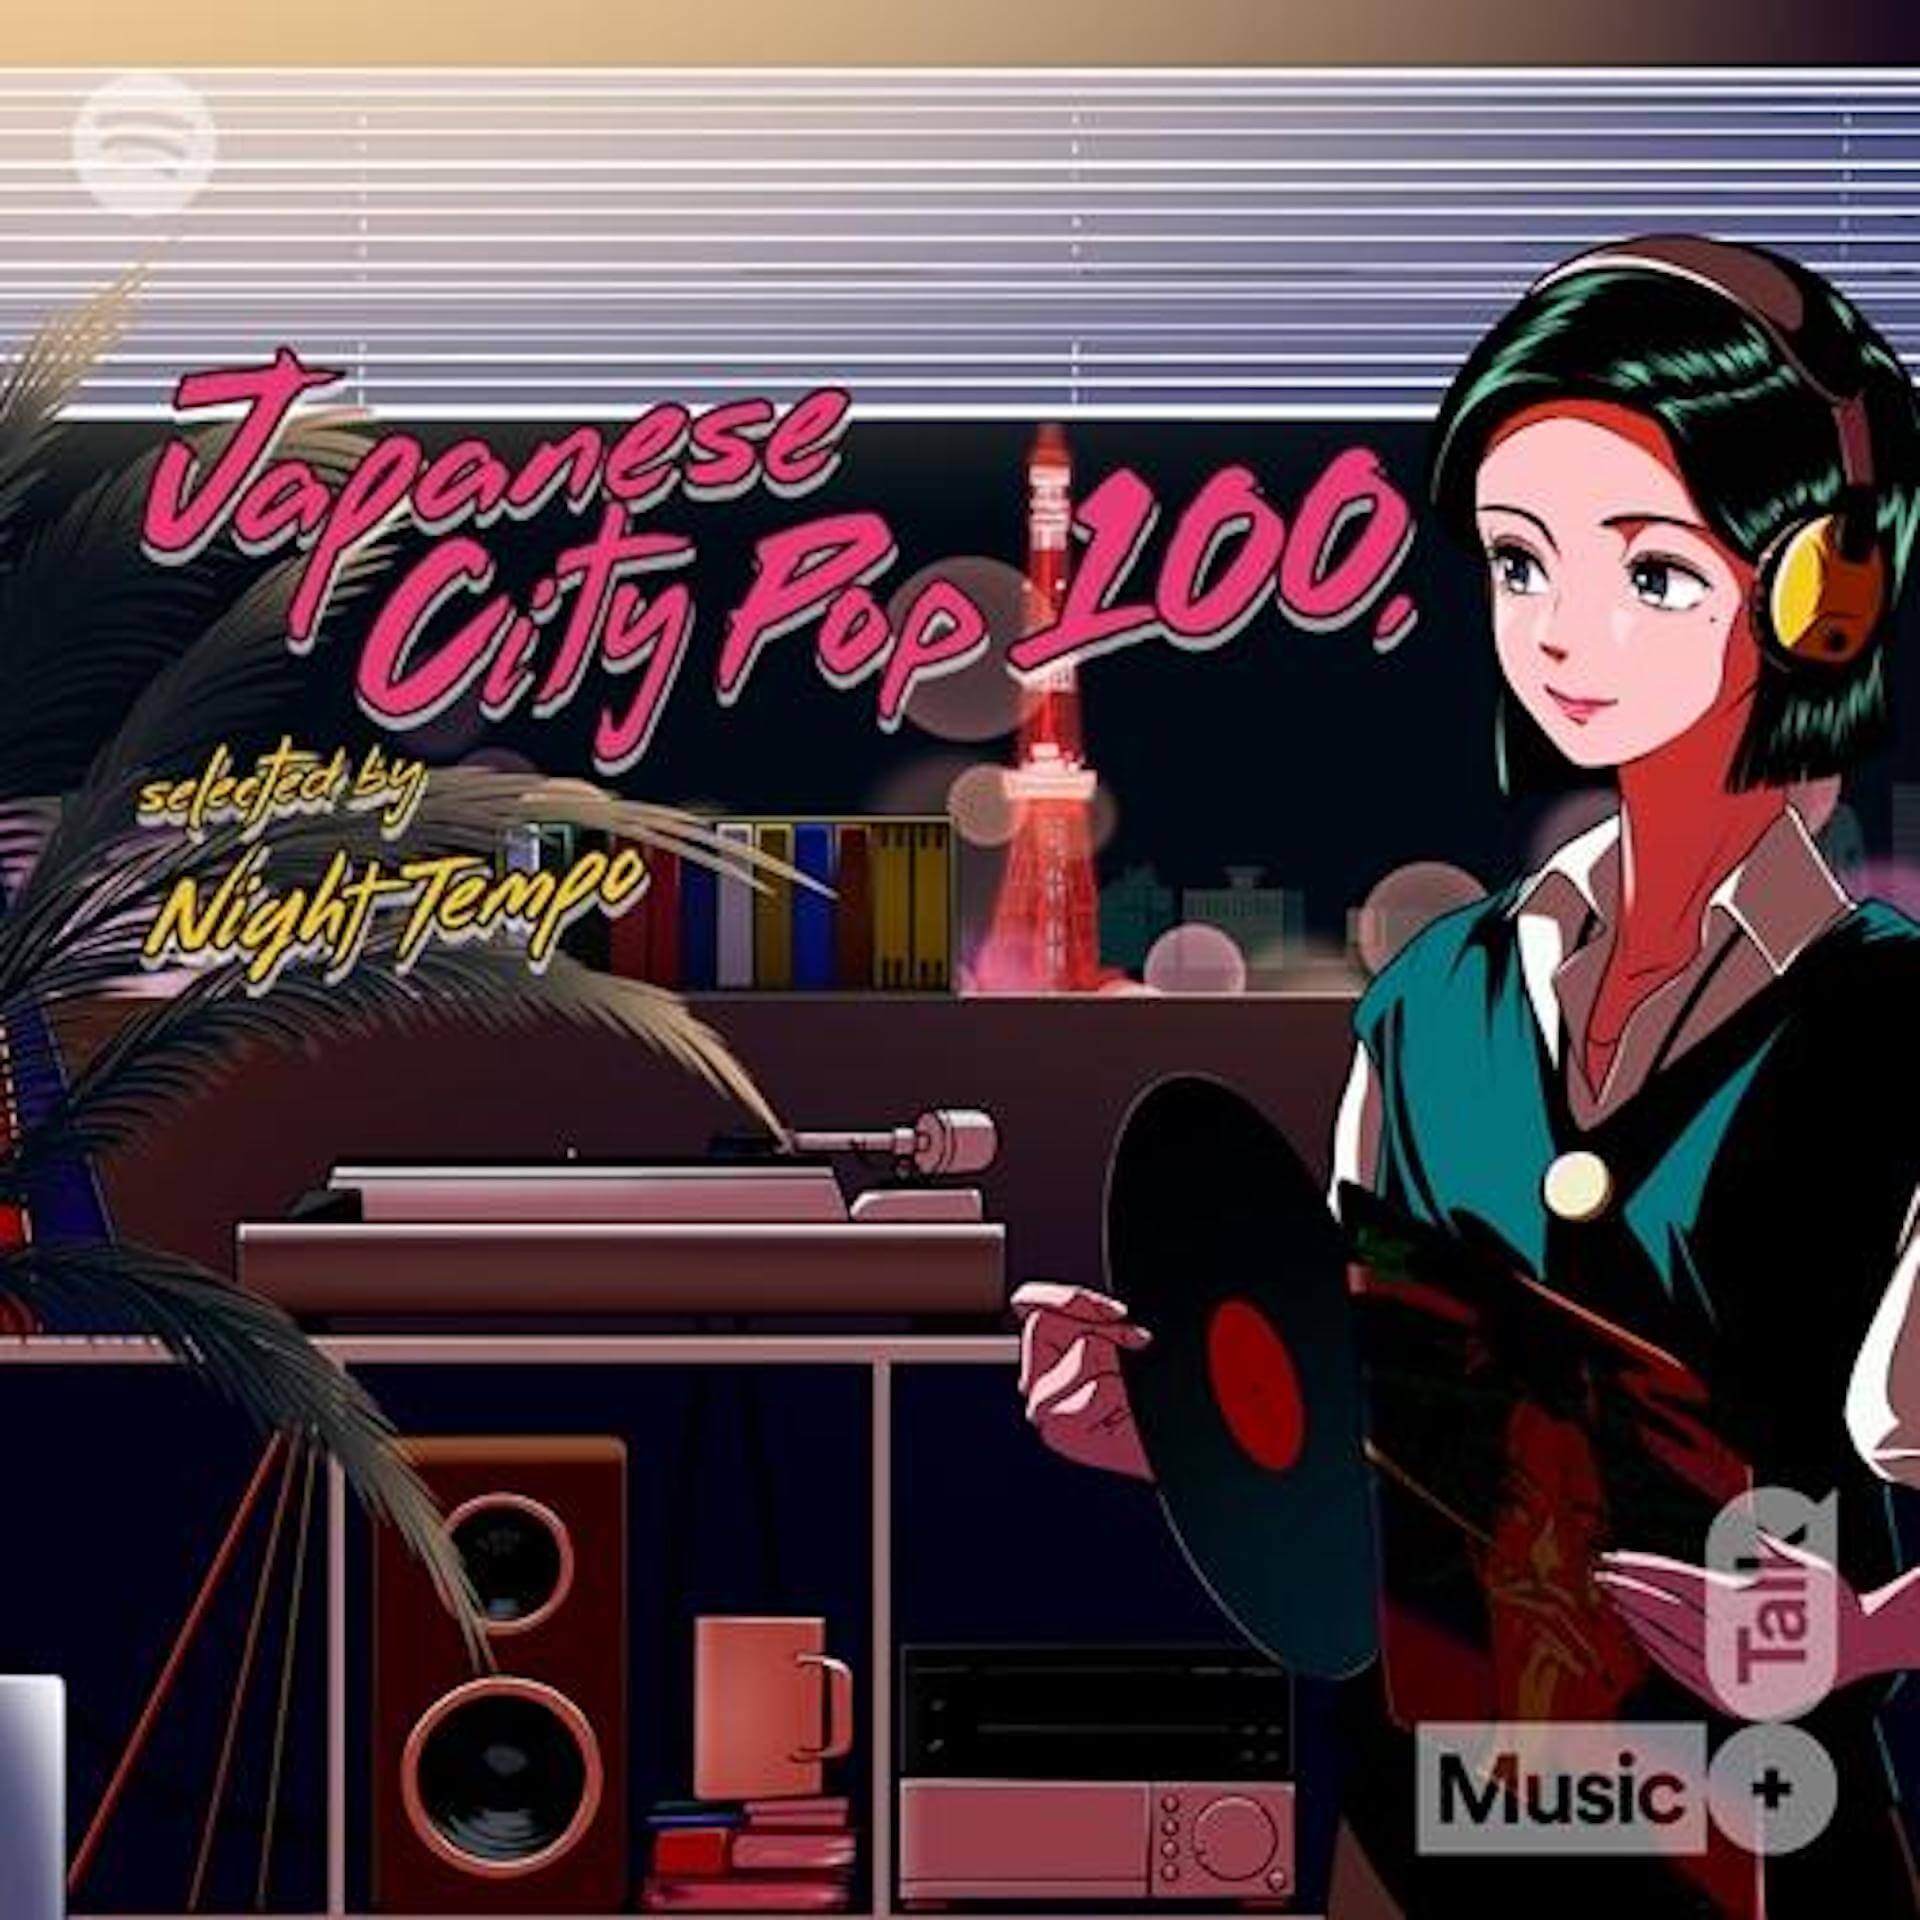 Night Tempoが厳選した100曲を紹介する書籍『Japanese City Pop 100, selected by Night Tempo』が本日発売！ music_220201_nighttempo_01